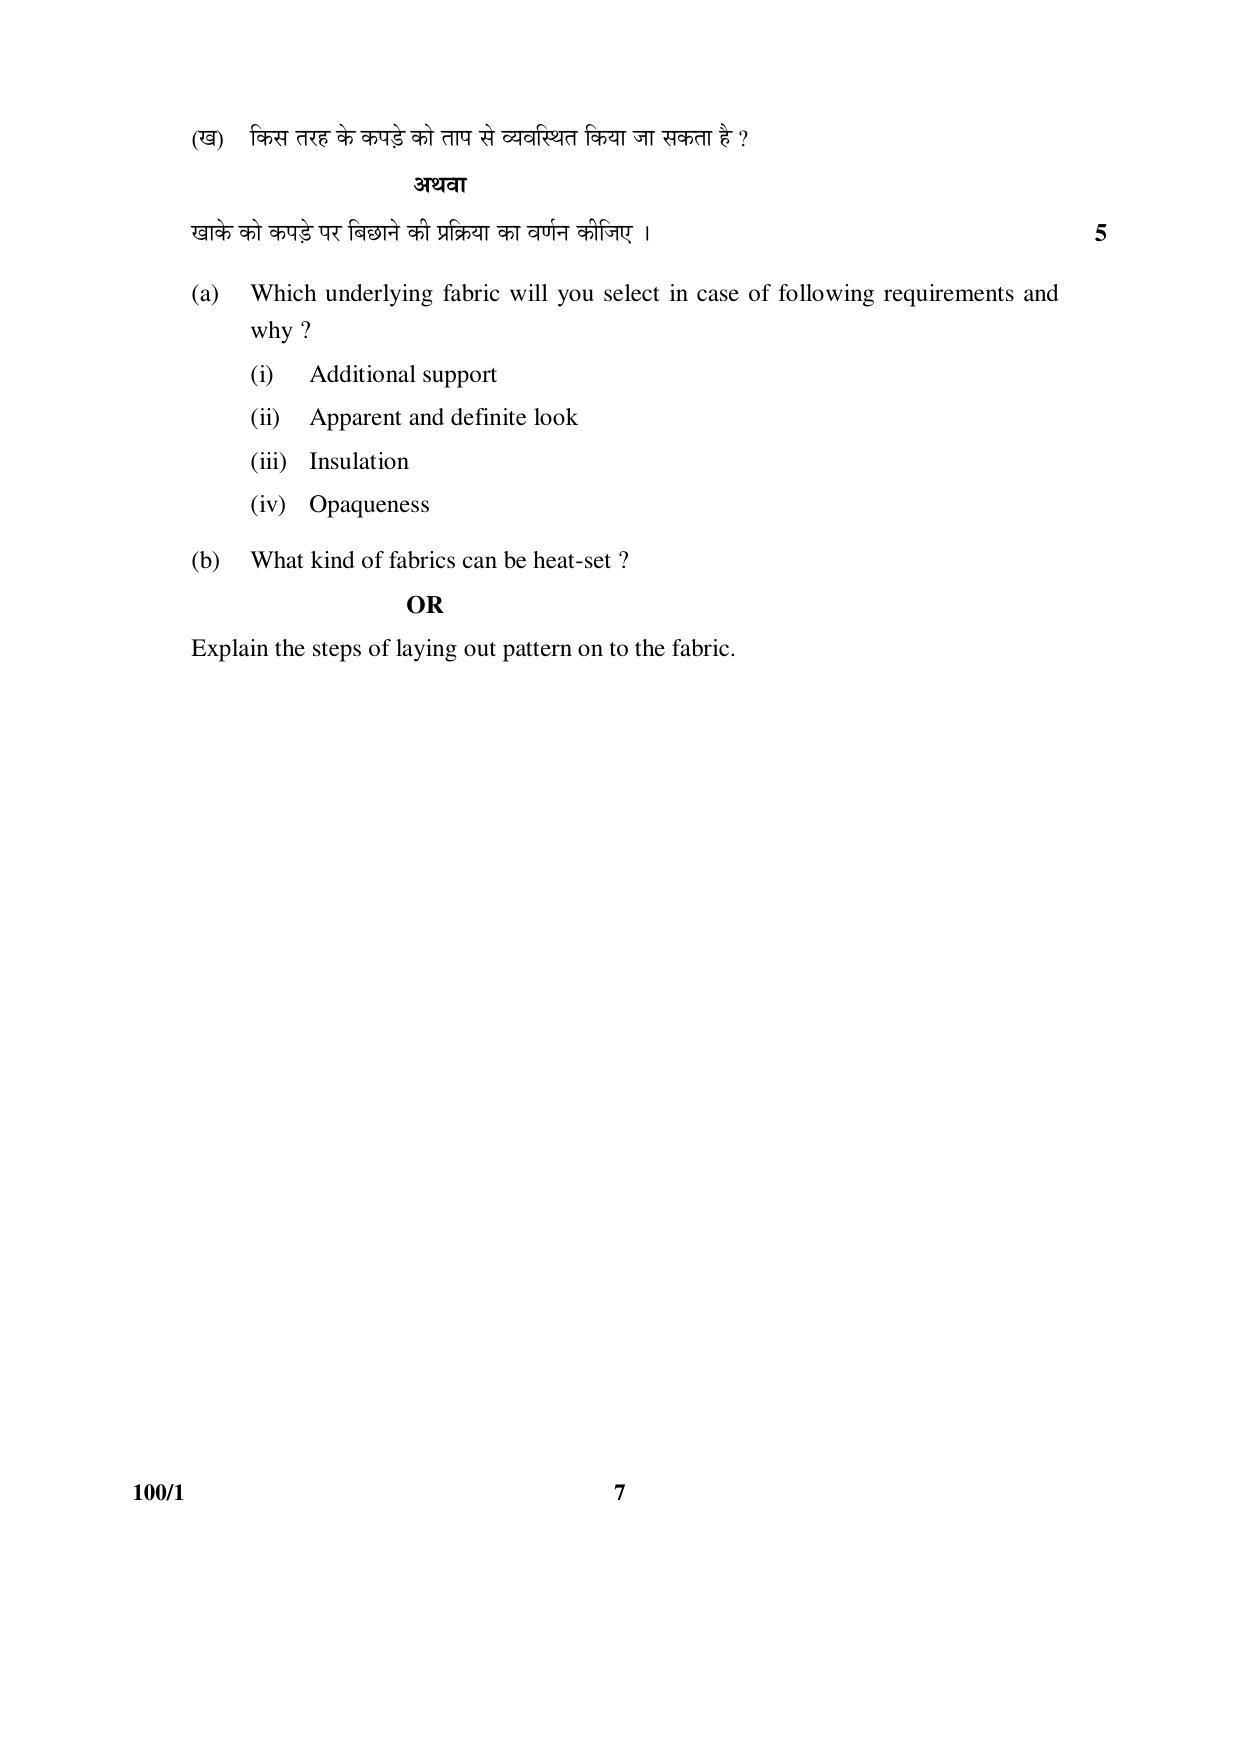 CBSE Class 12 100-1 FASHION STUDIES 2016 Question Paper - Page 7